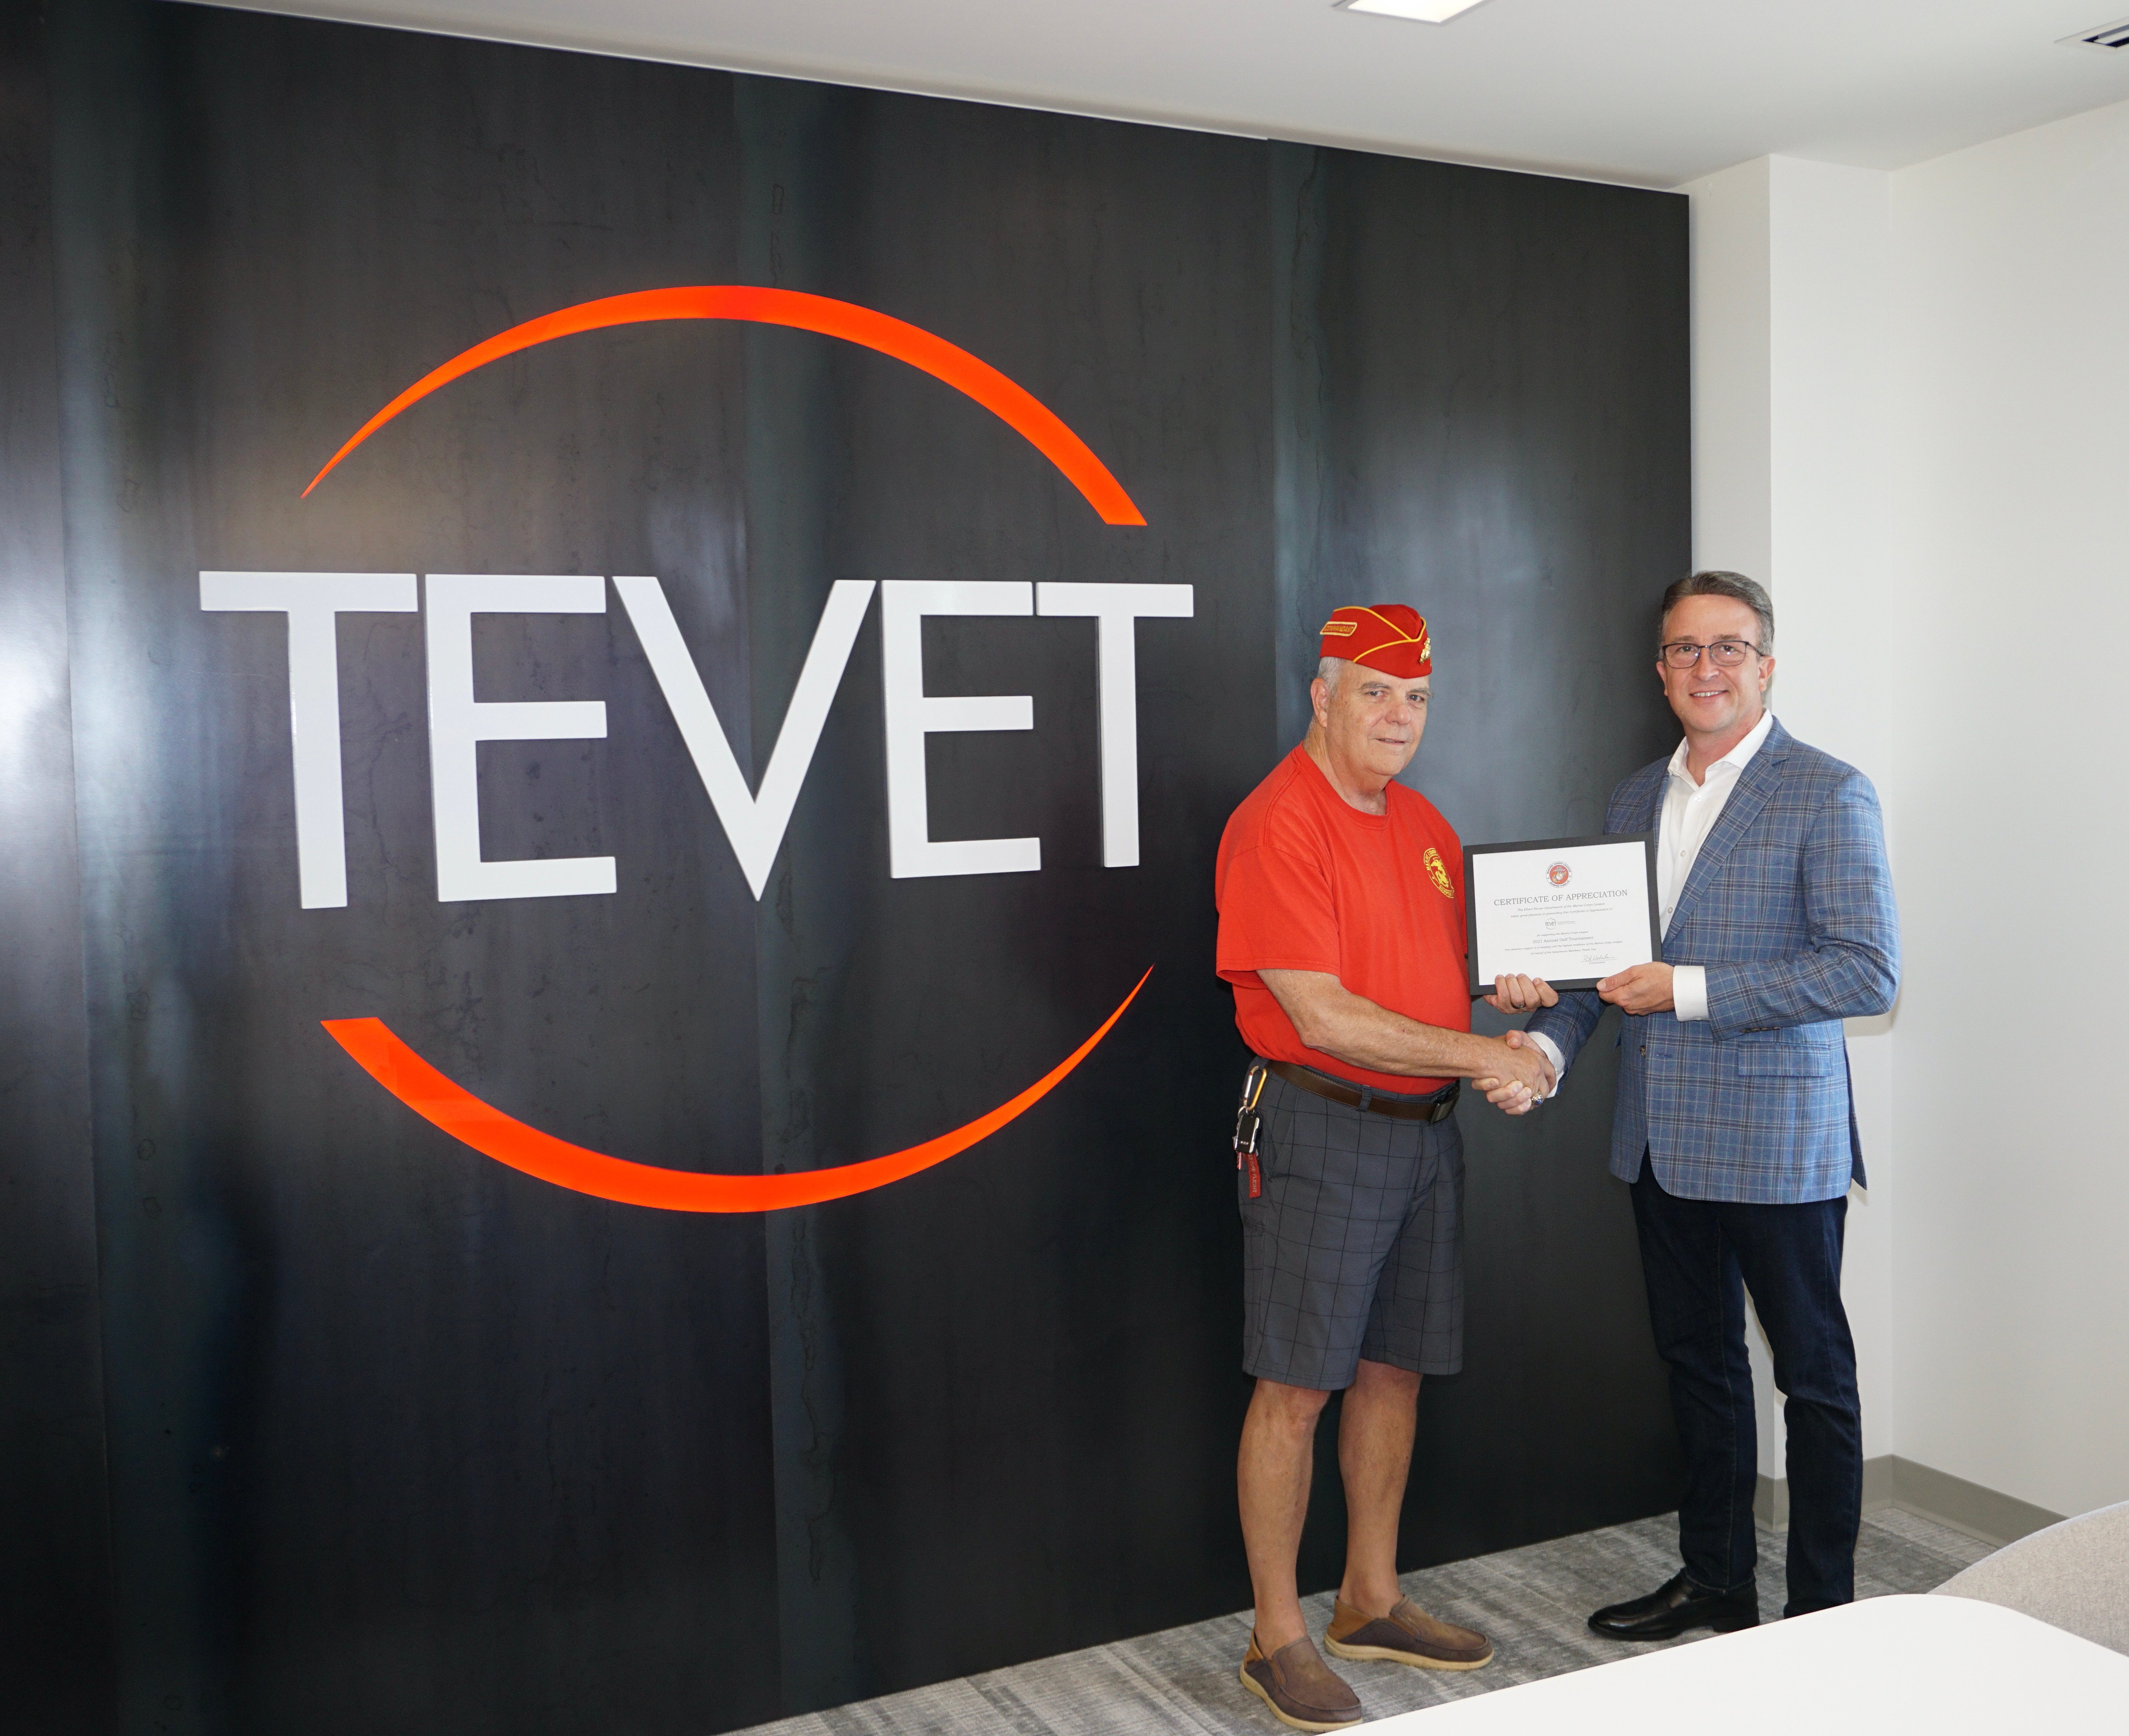 TEVET Supports Local Marine Detachment’s Annual Golf Tournament